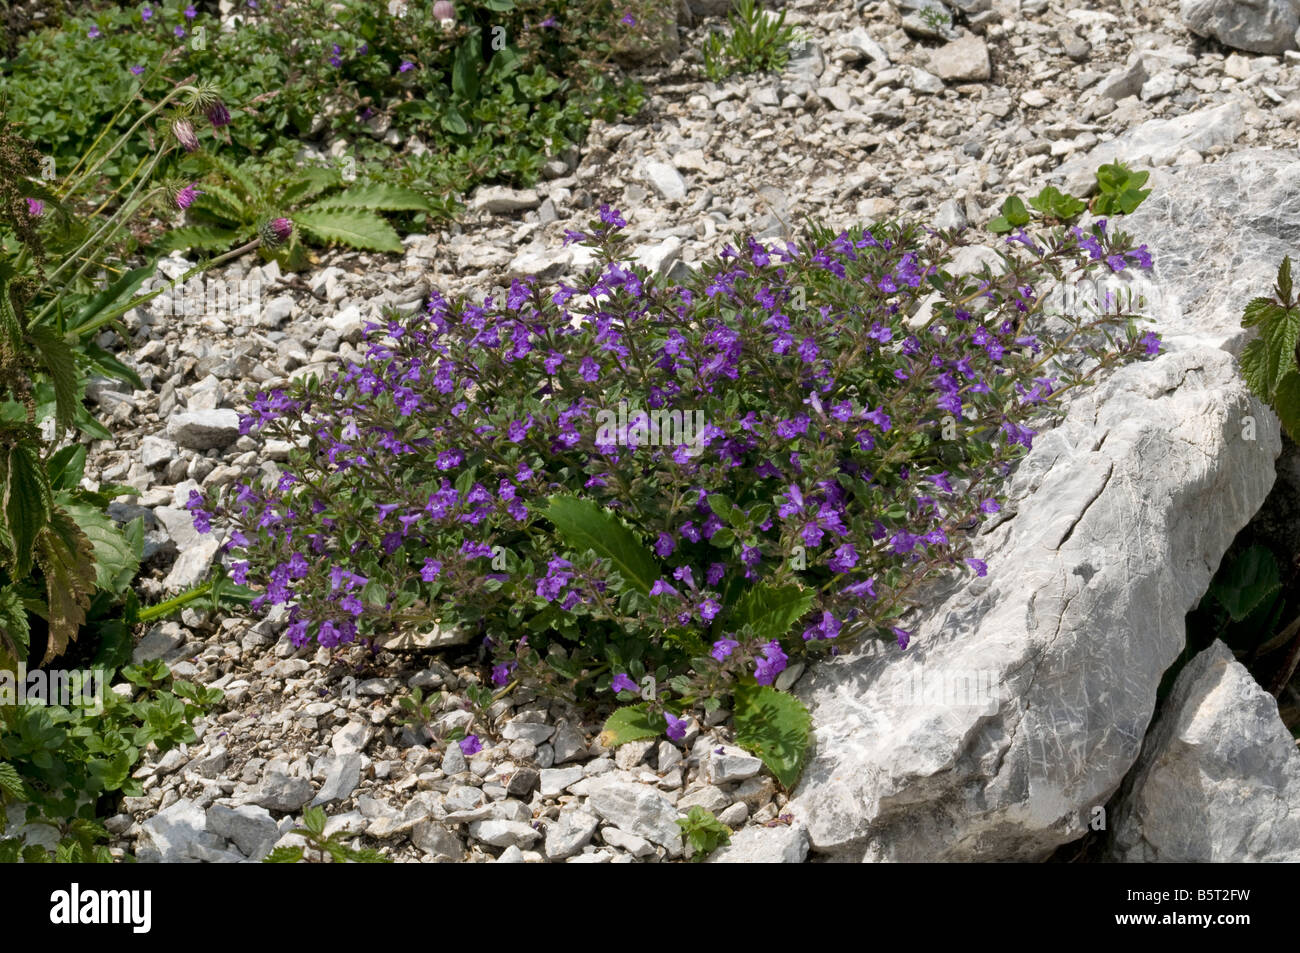 Acinos alpinus, the Alpine Calamint, growing in scree near Gstaad, Switzerland. Stock Photo